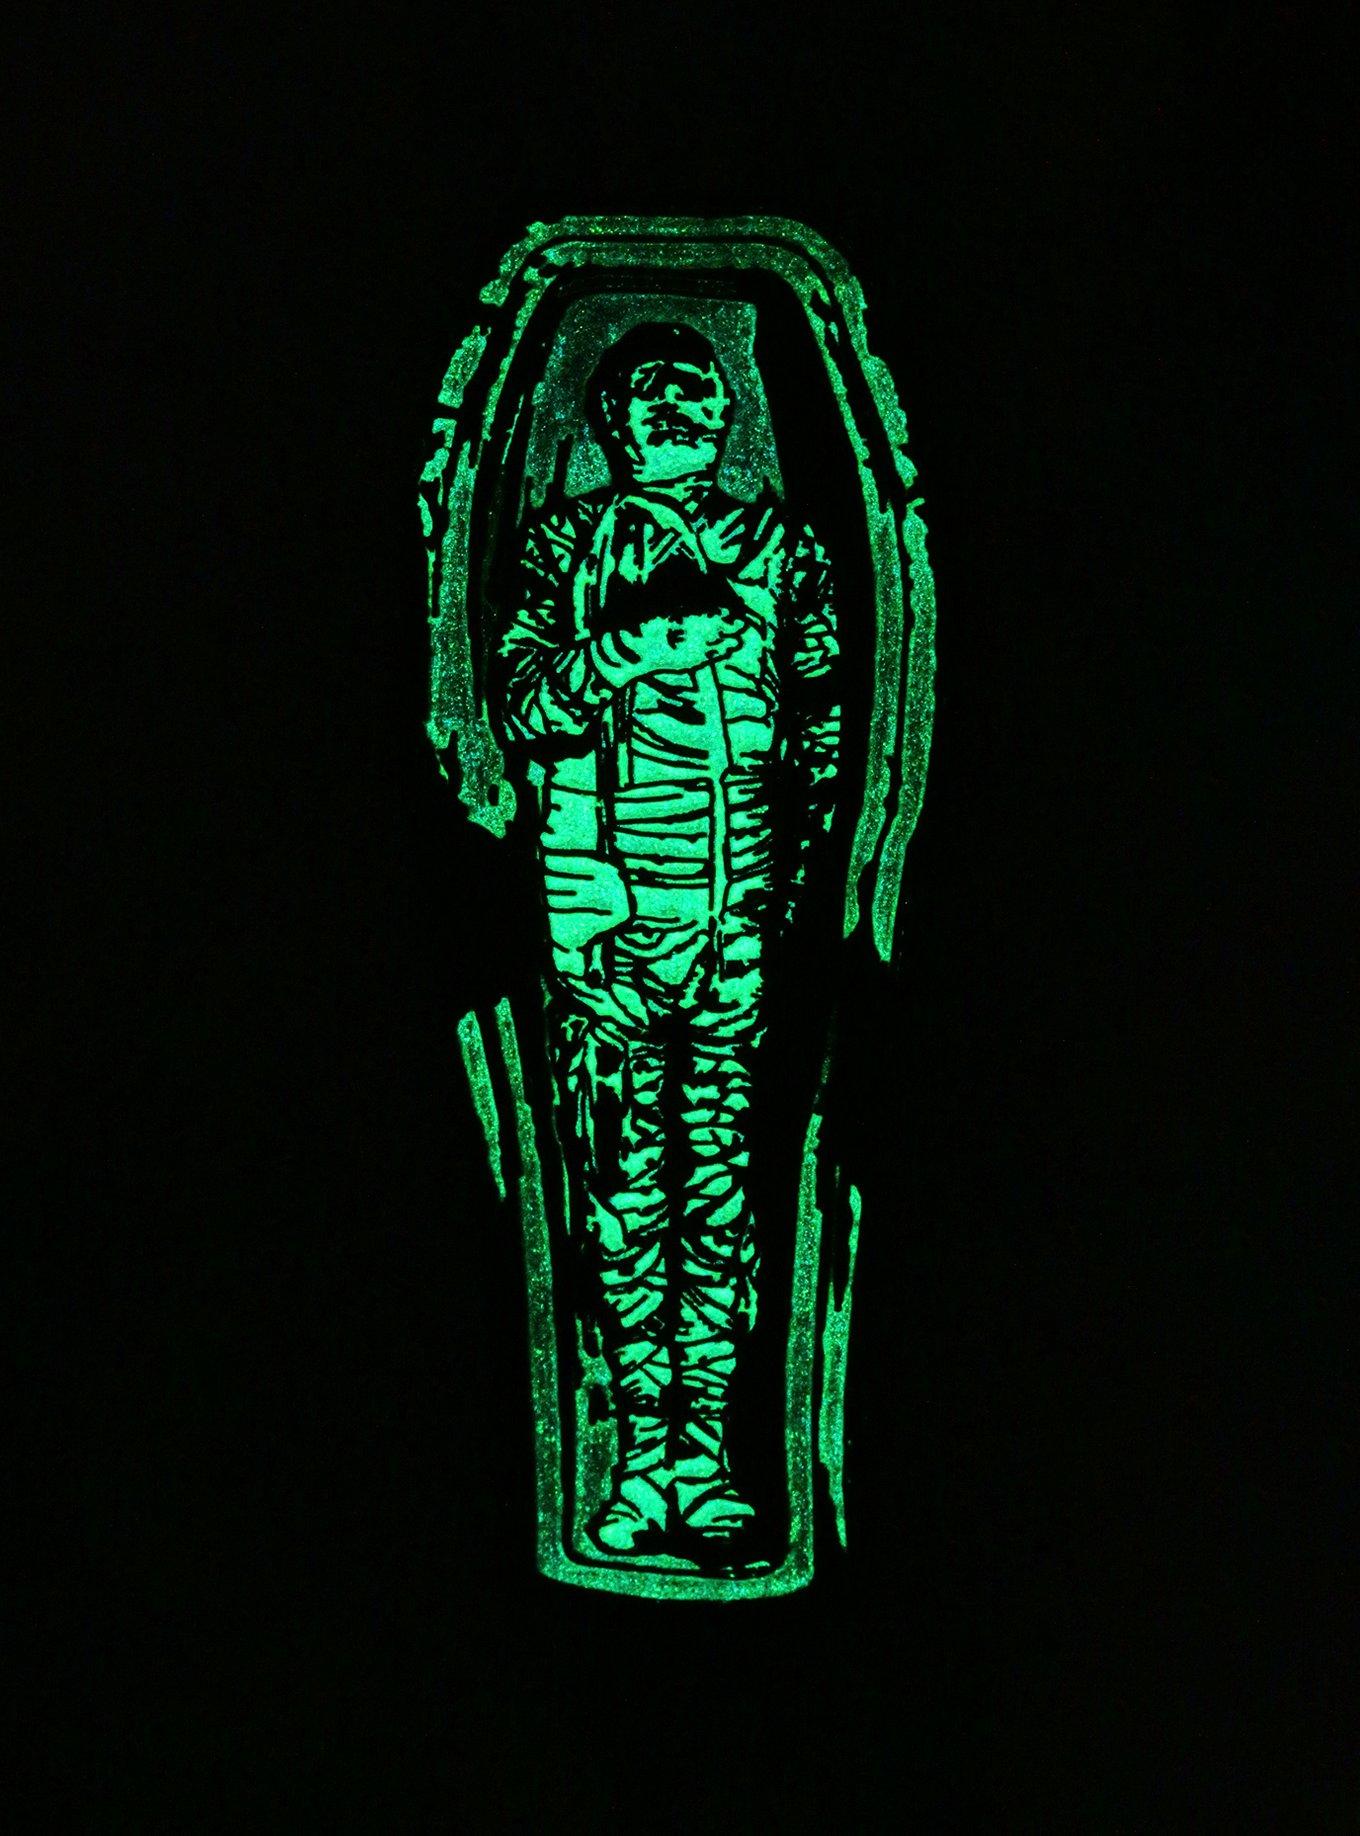 Universal Studios Monsters The Mummy Sarcophagus Glow-In-The-Dark Enamel Pin, , alternate